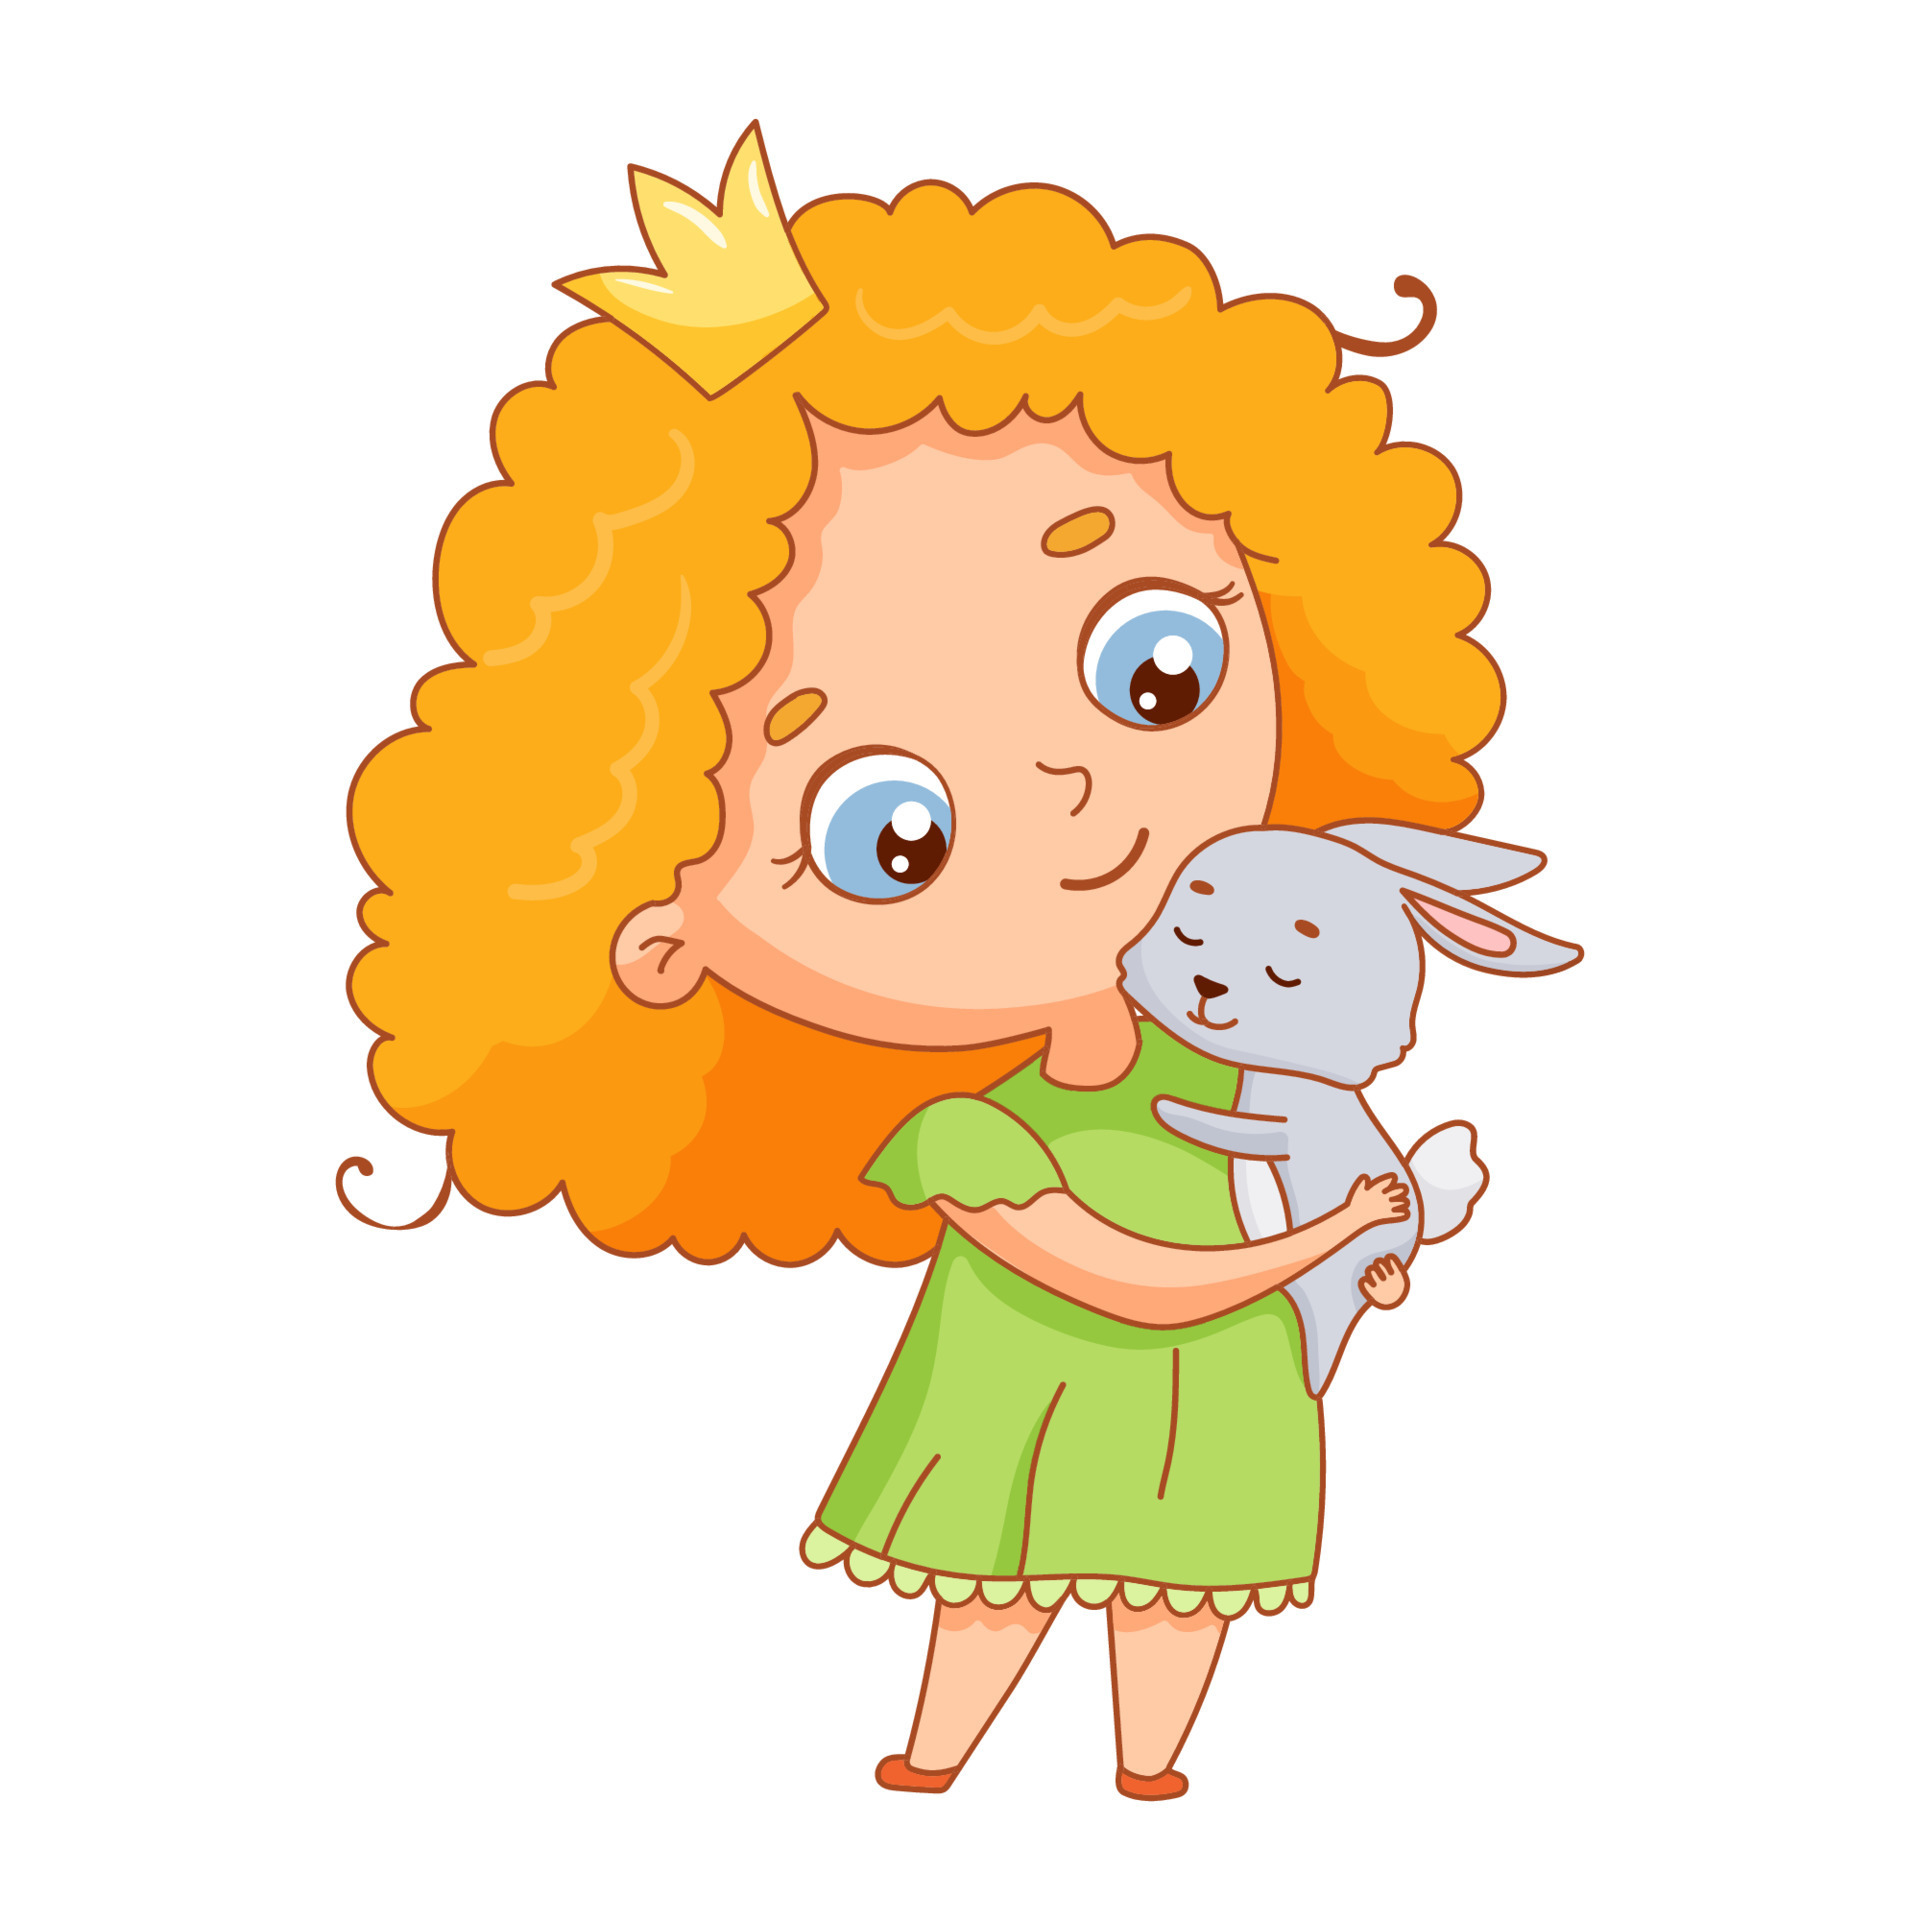 Cute rabbit princess - cartoon illustration Stock Vector Image